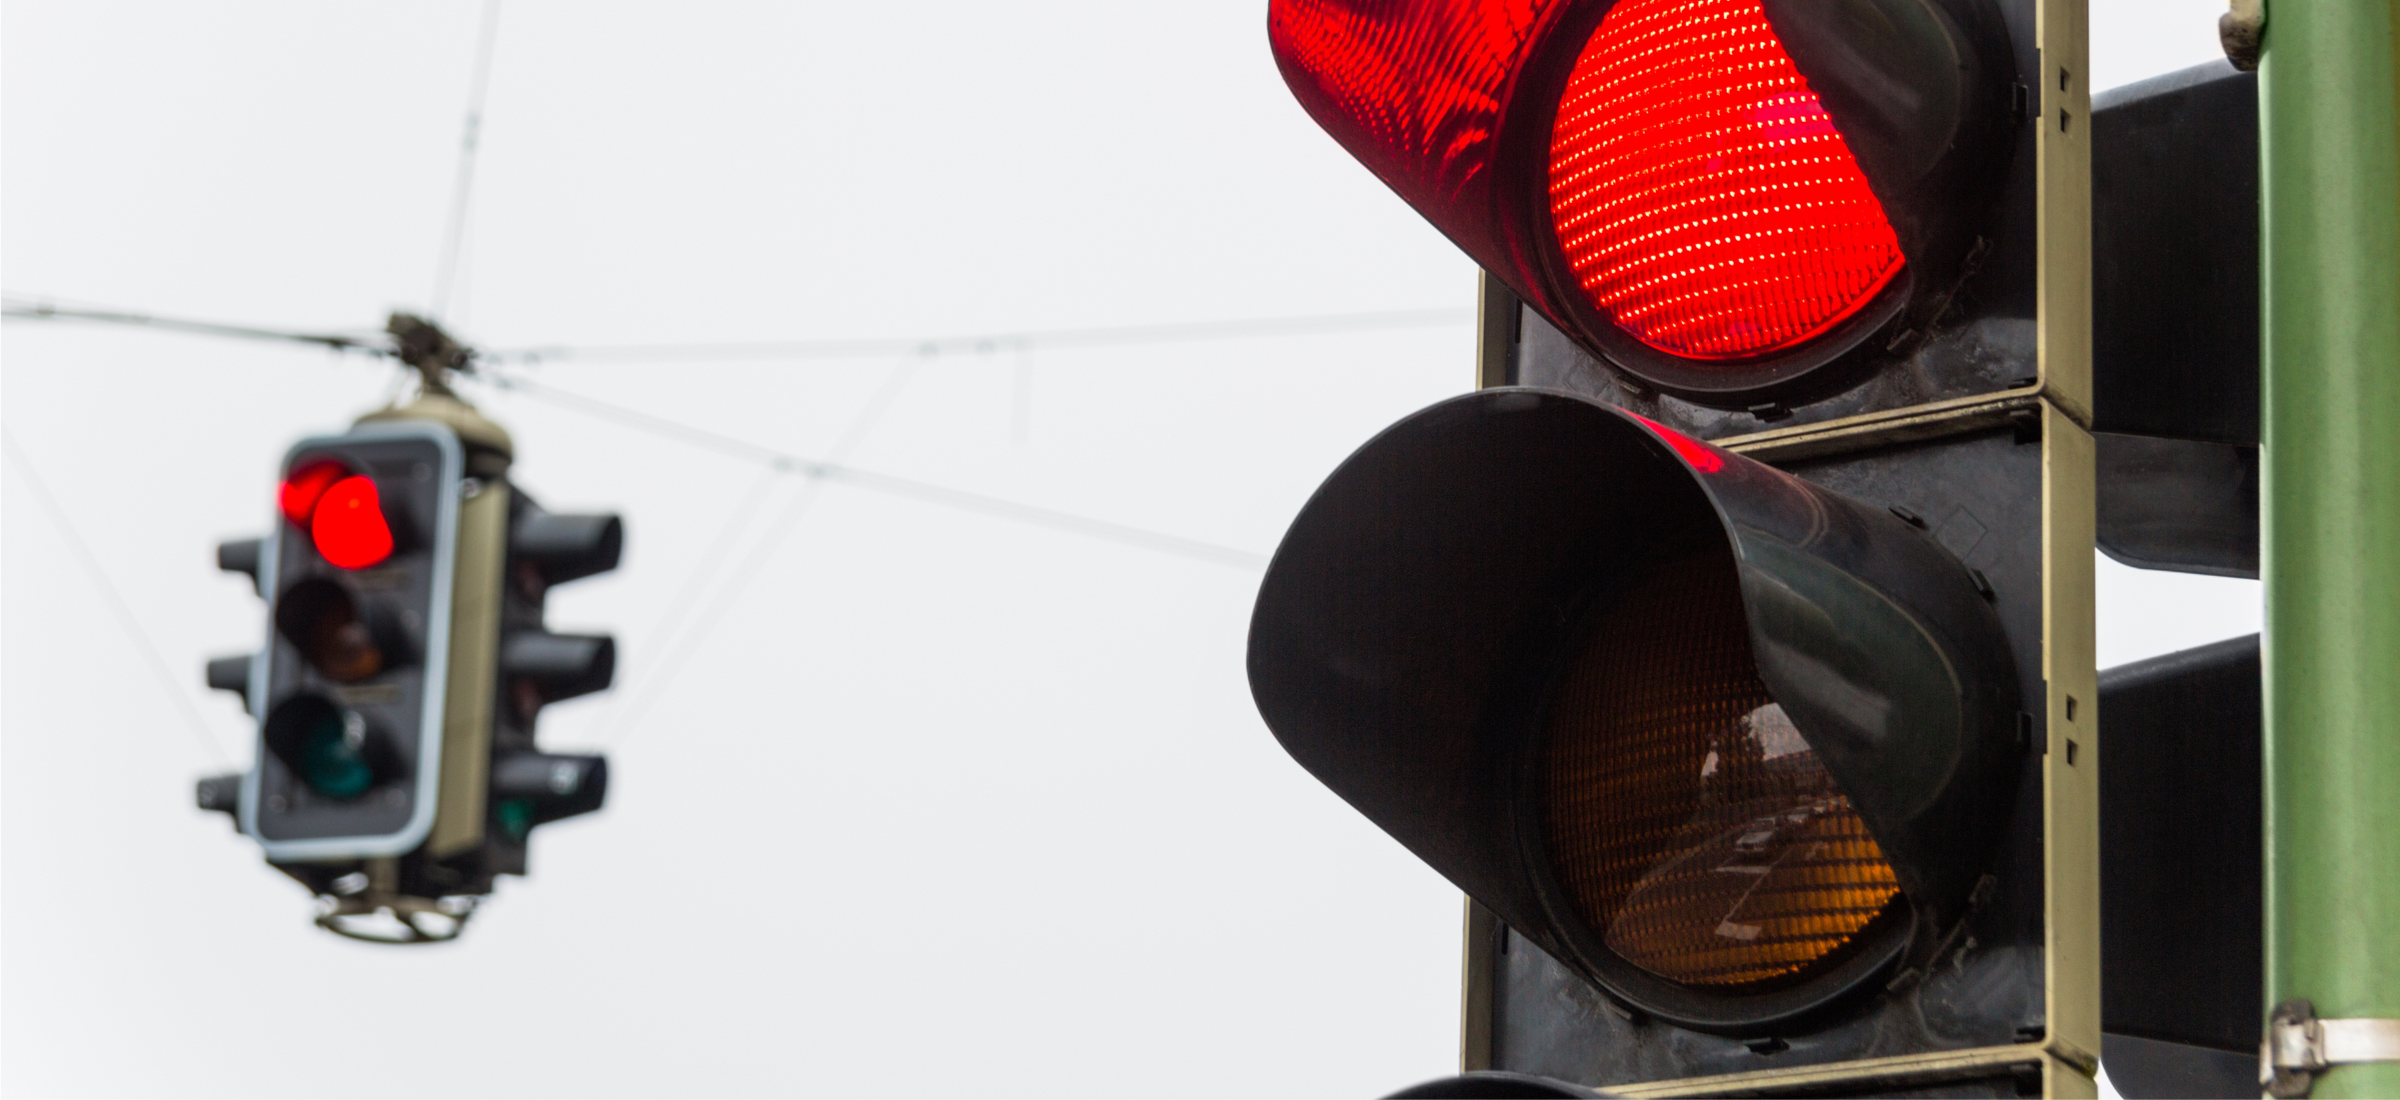 Traffic light red. Красный светофор. Красный сигнал светофора. Красный цвет светофора. Красный йвет световофра.